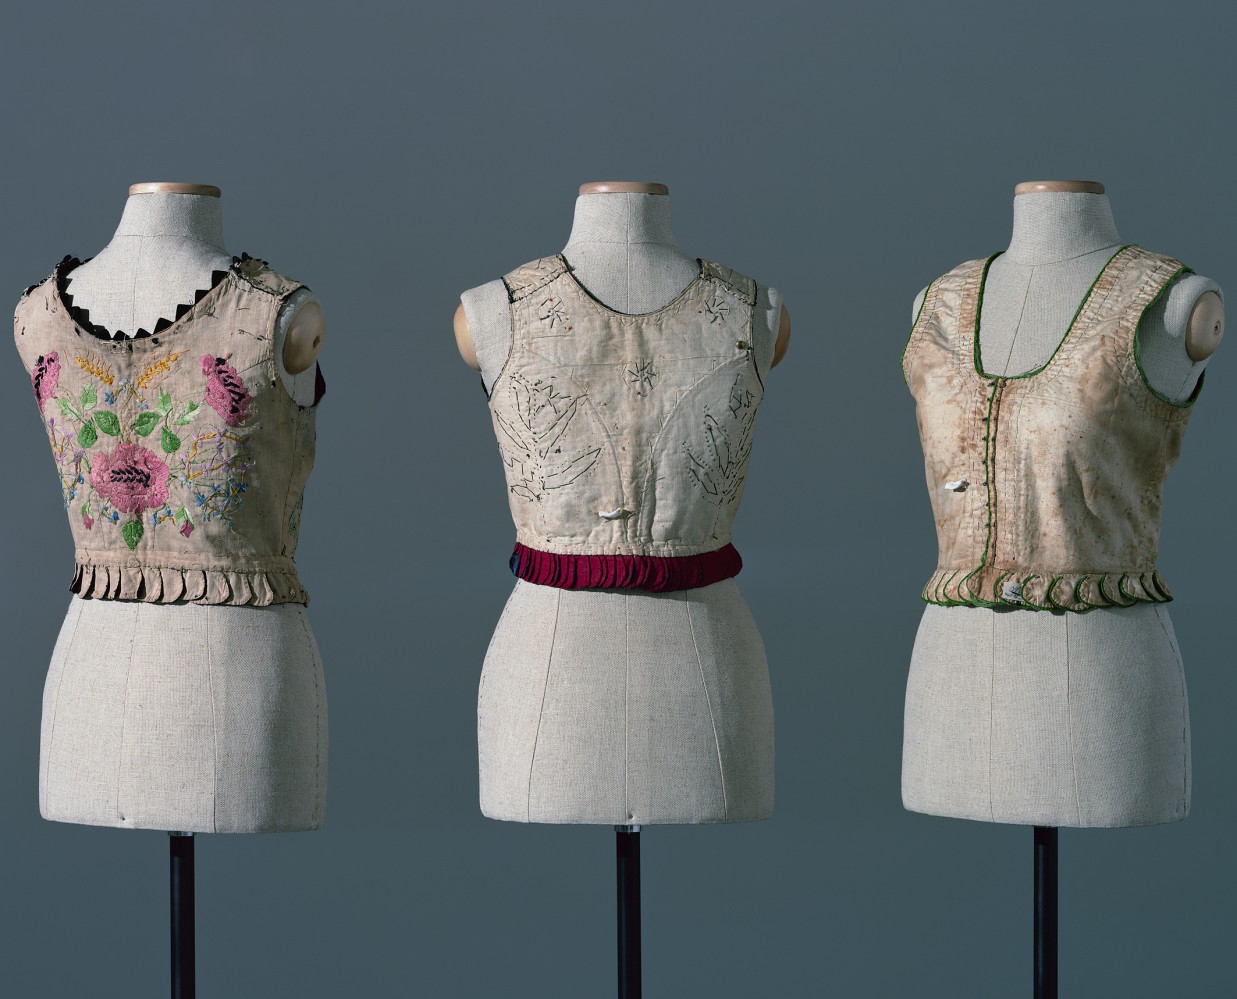 Reverse 7 (corsets, 1920s) Regional Museum in Tarnów, 140 cm x 170 cm, 2016